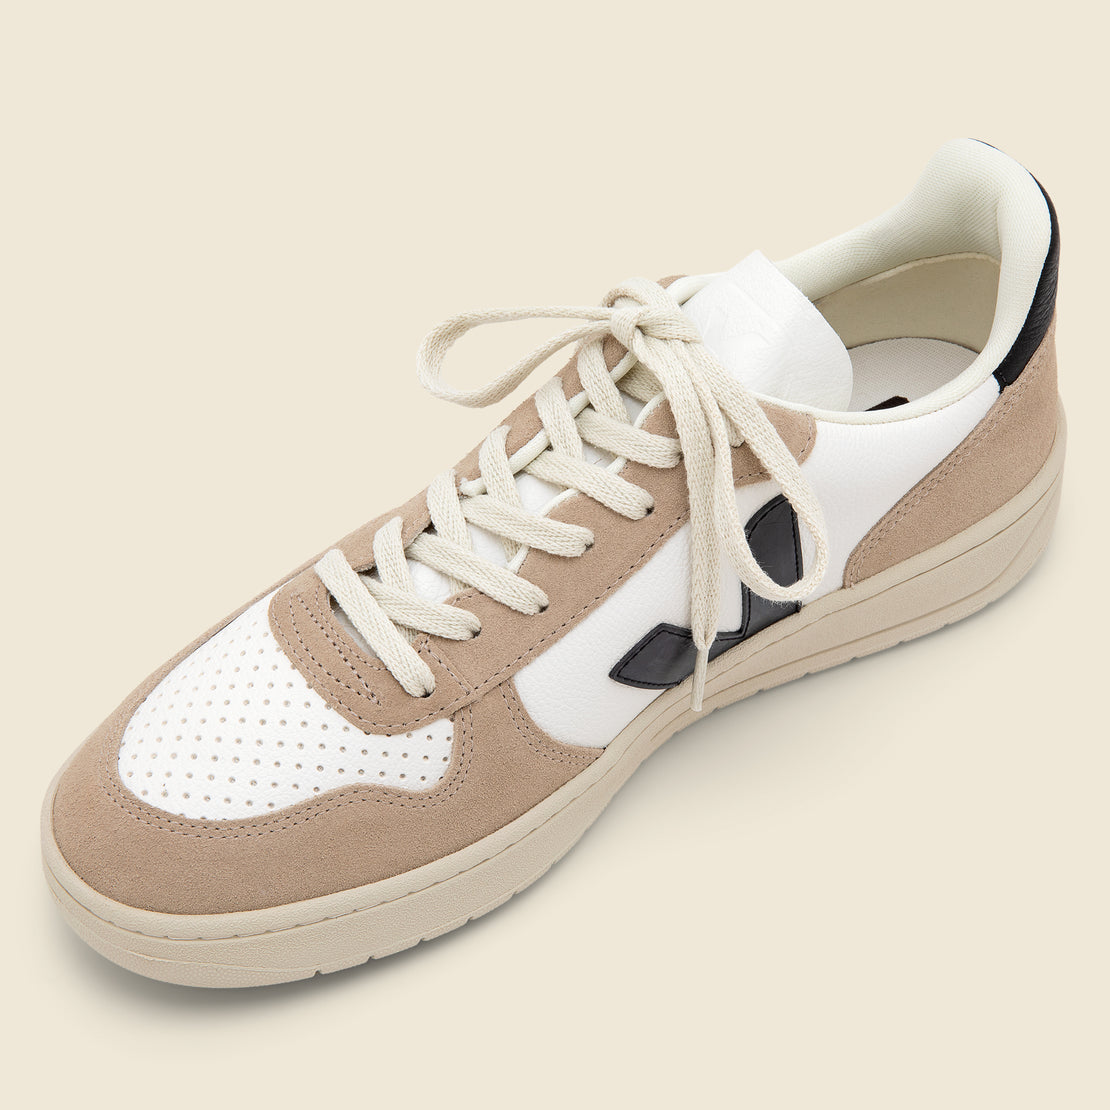 V-10 ChromeFree Sneaker - Black Sahara - Veja - STAG Provisions - Shoes - Athletic